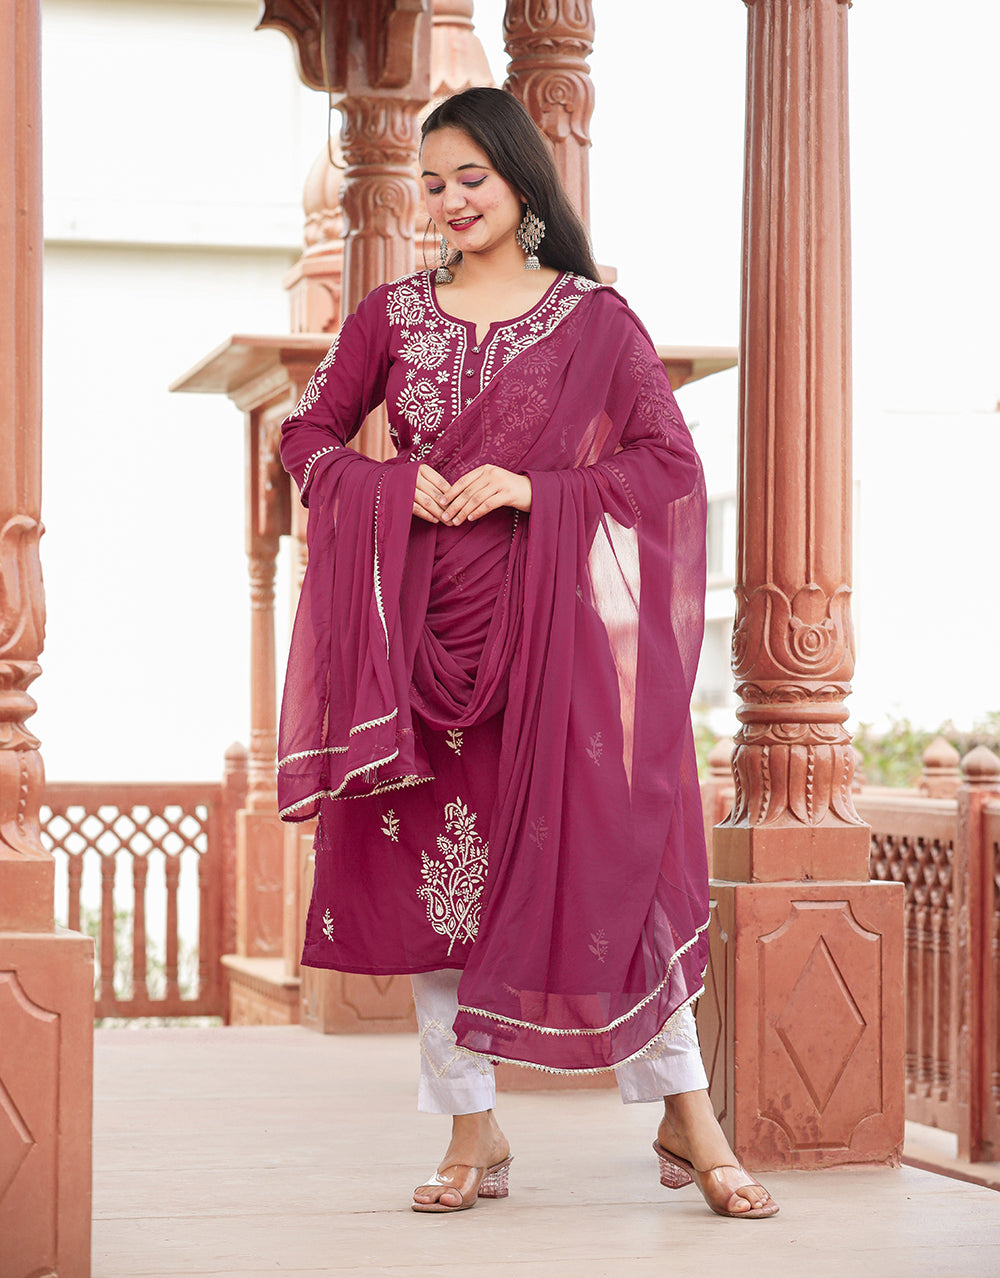 Lavangi Lucknow Chikan Onion Pink Unstitched Cotton Dress Material - Lavangi